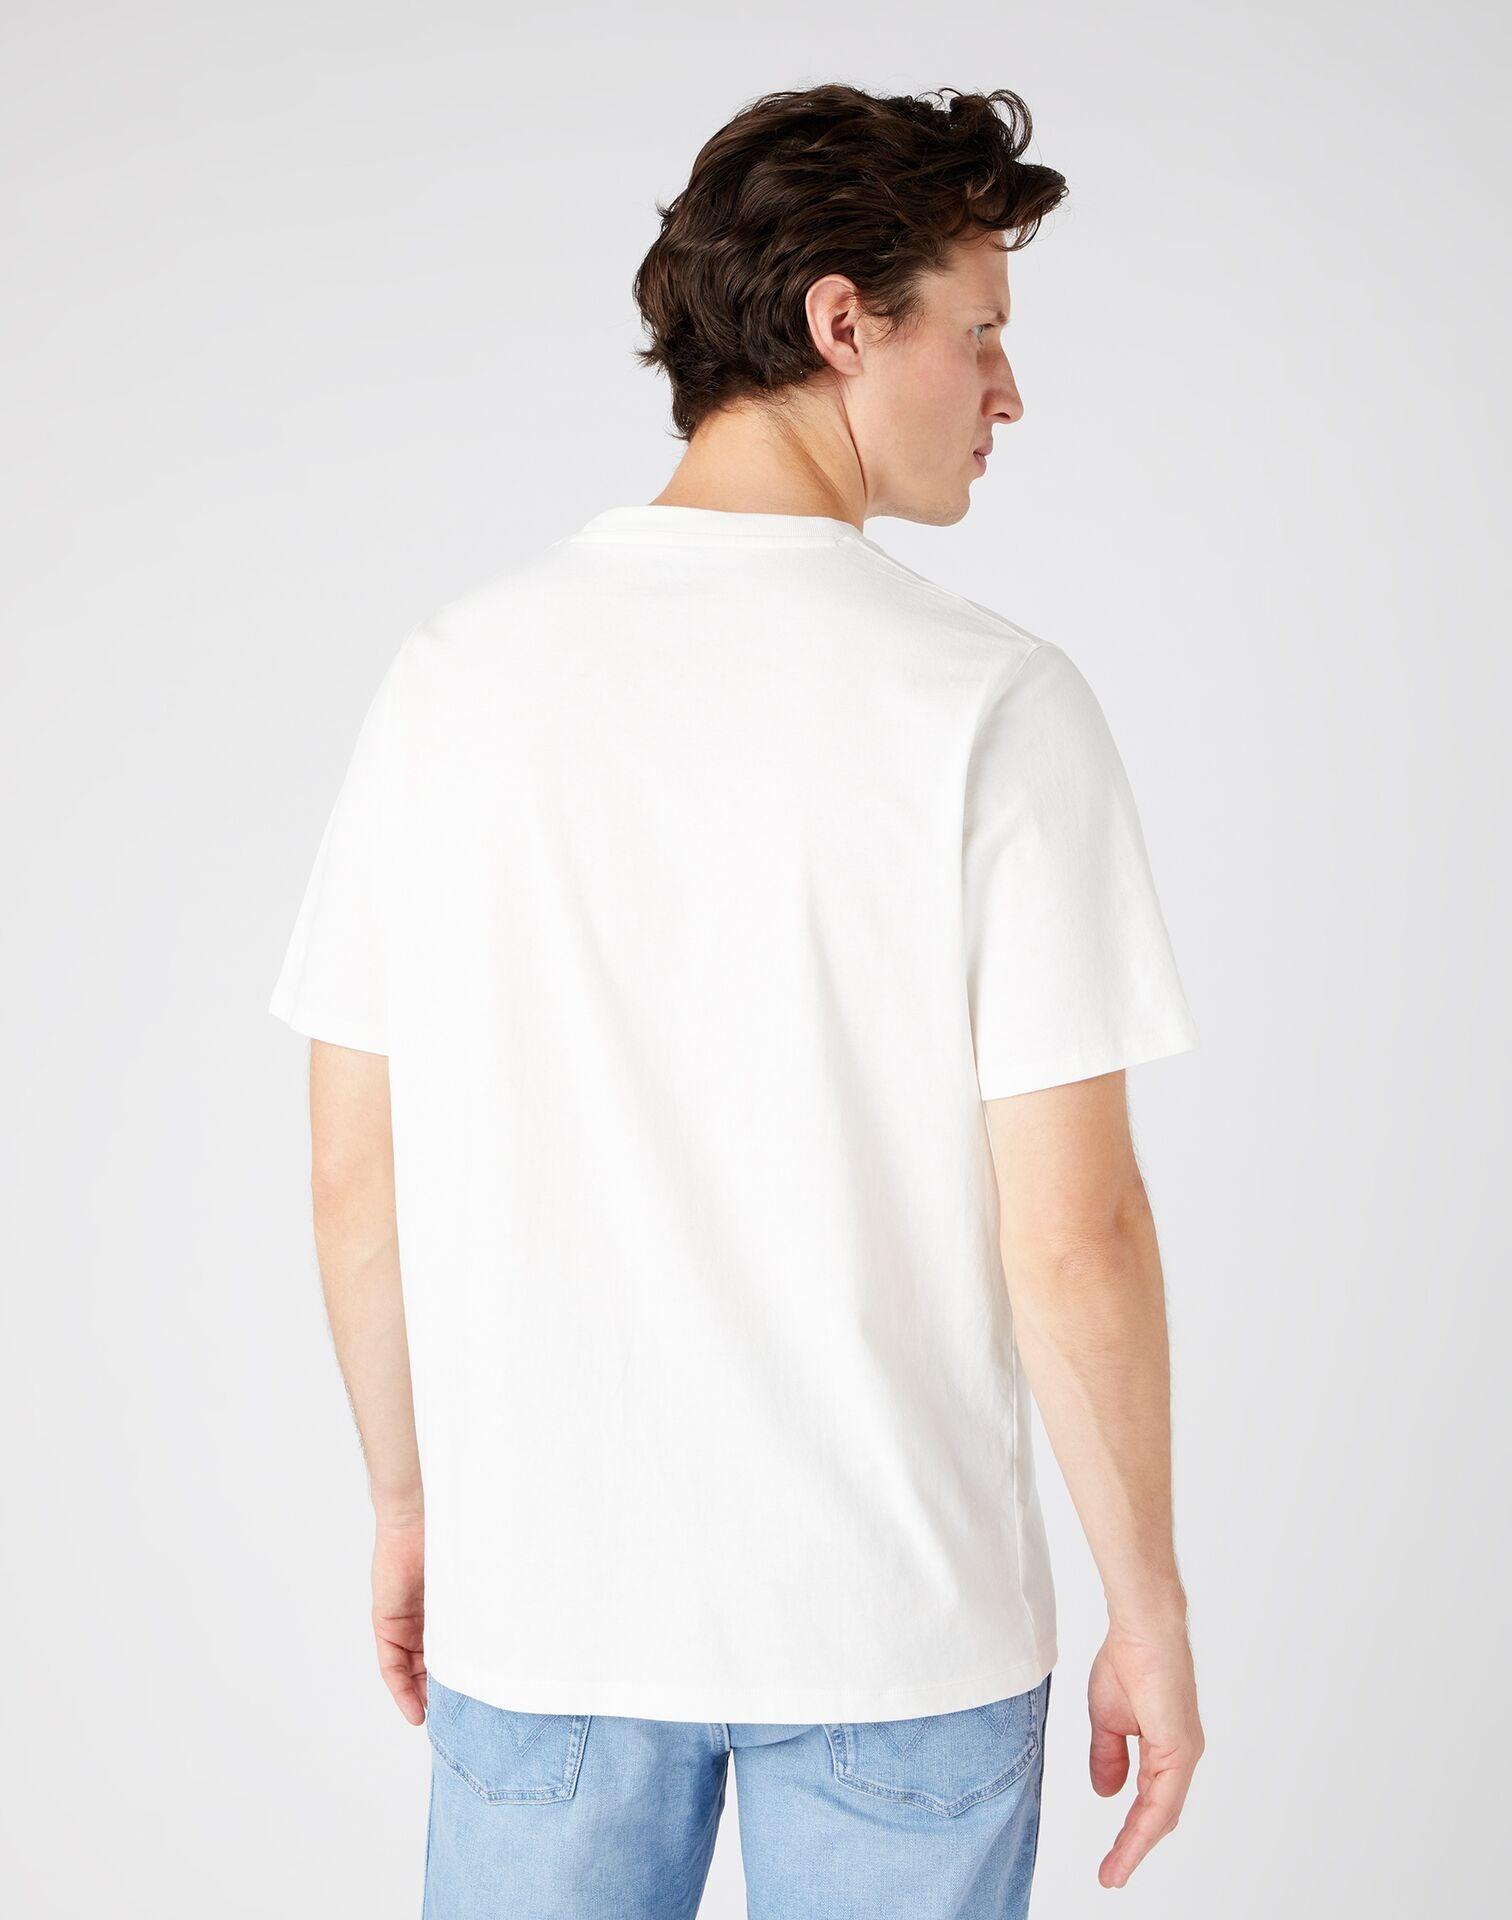 WRANGLER - חולצת טי אופוויט - MASHBIR//365